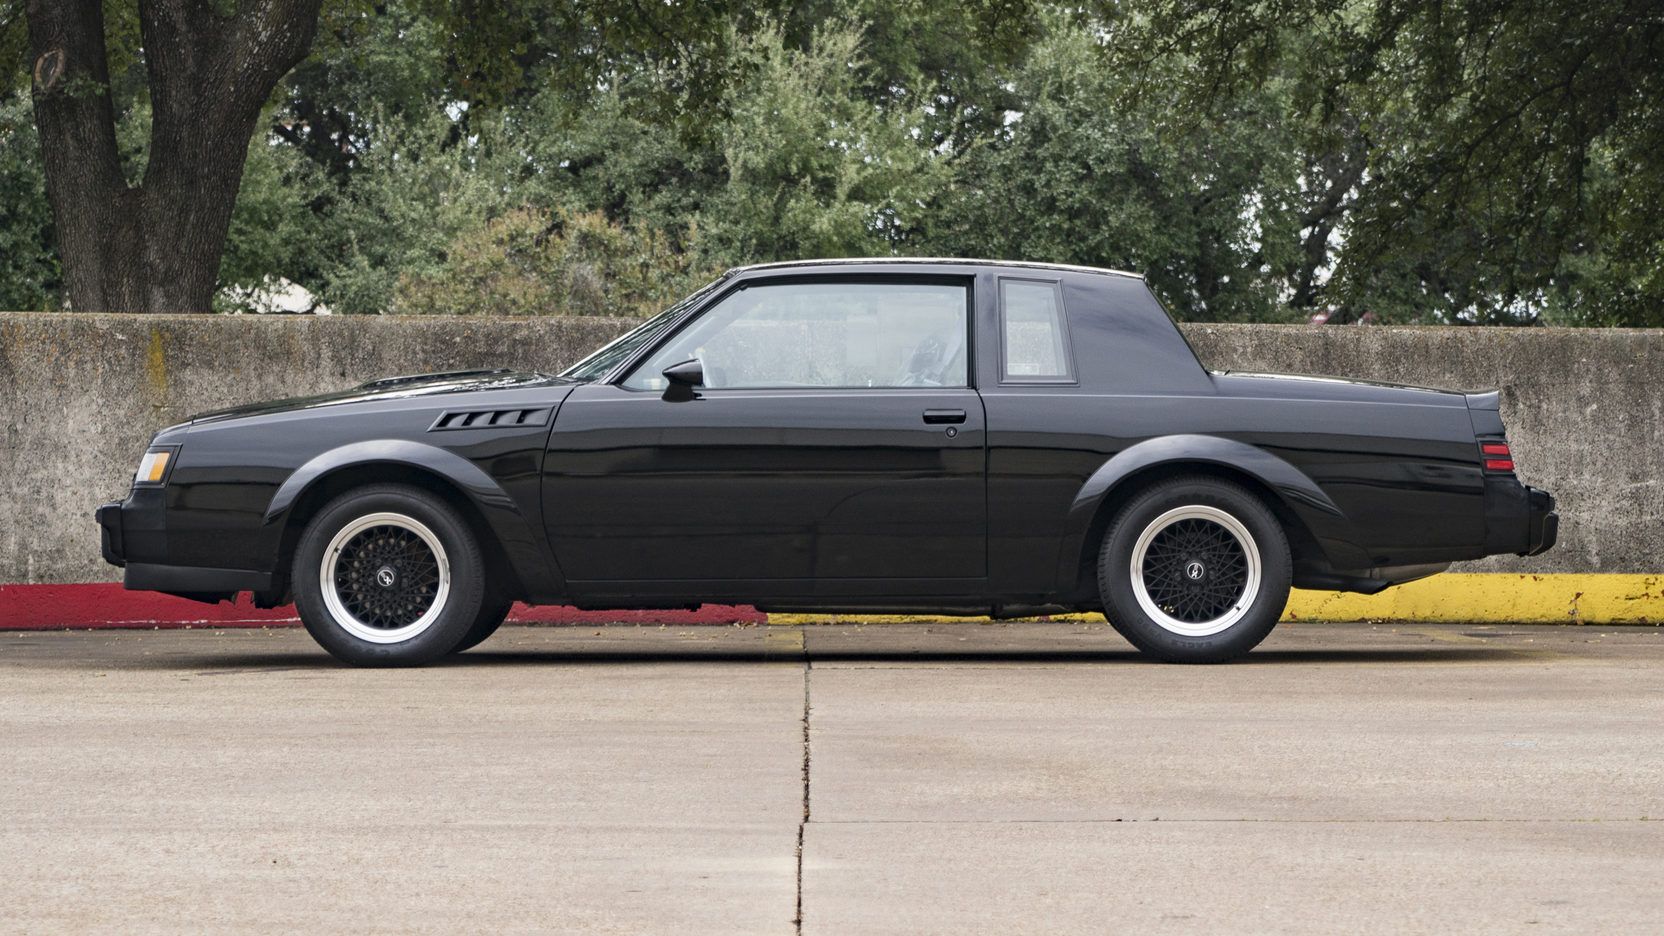 Black 1987 Buick Regal GNX parked